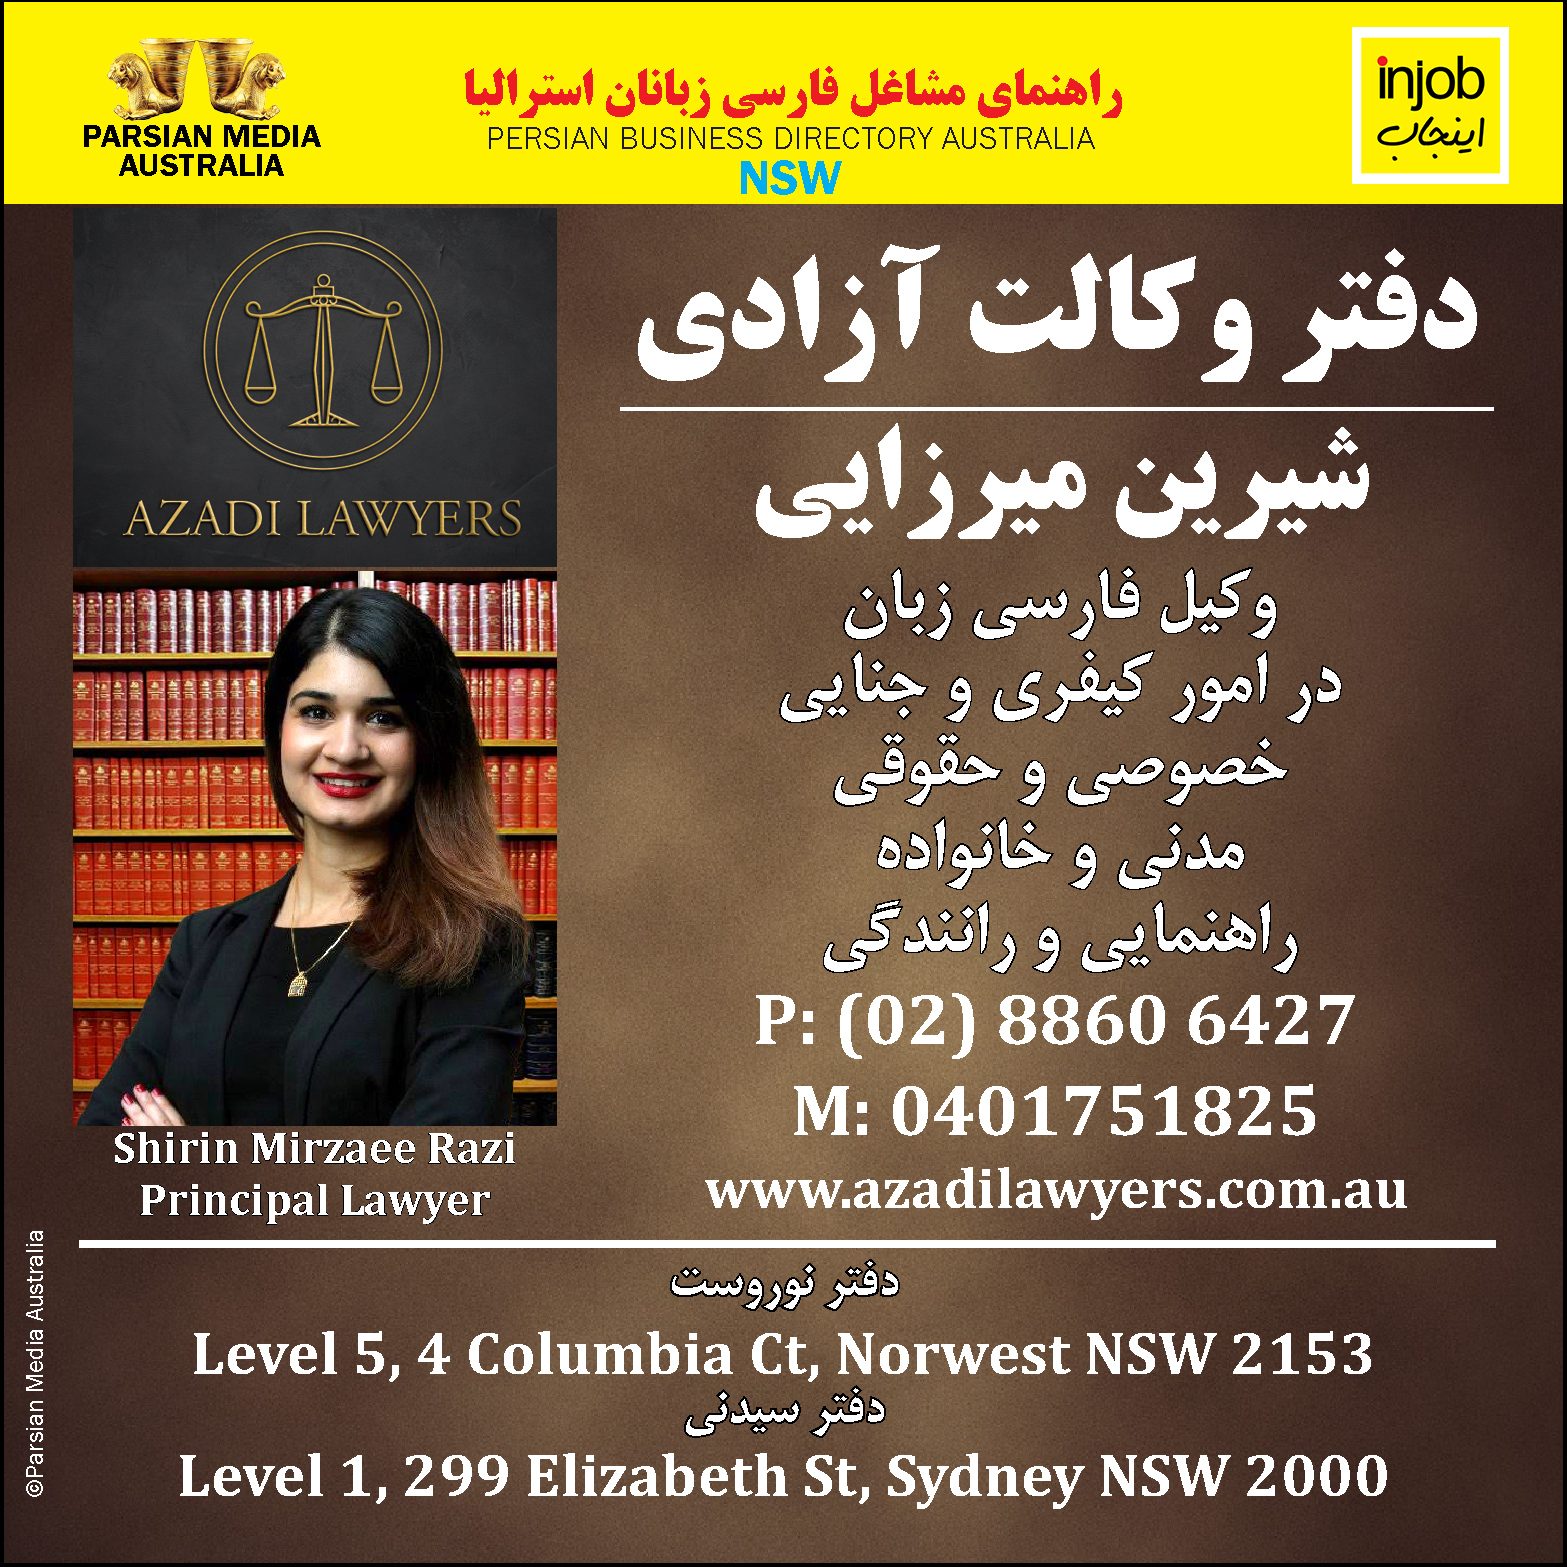 Azadi Legal-Lawyers-Injob-2021-2022-online.jpg